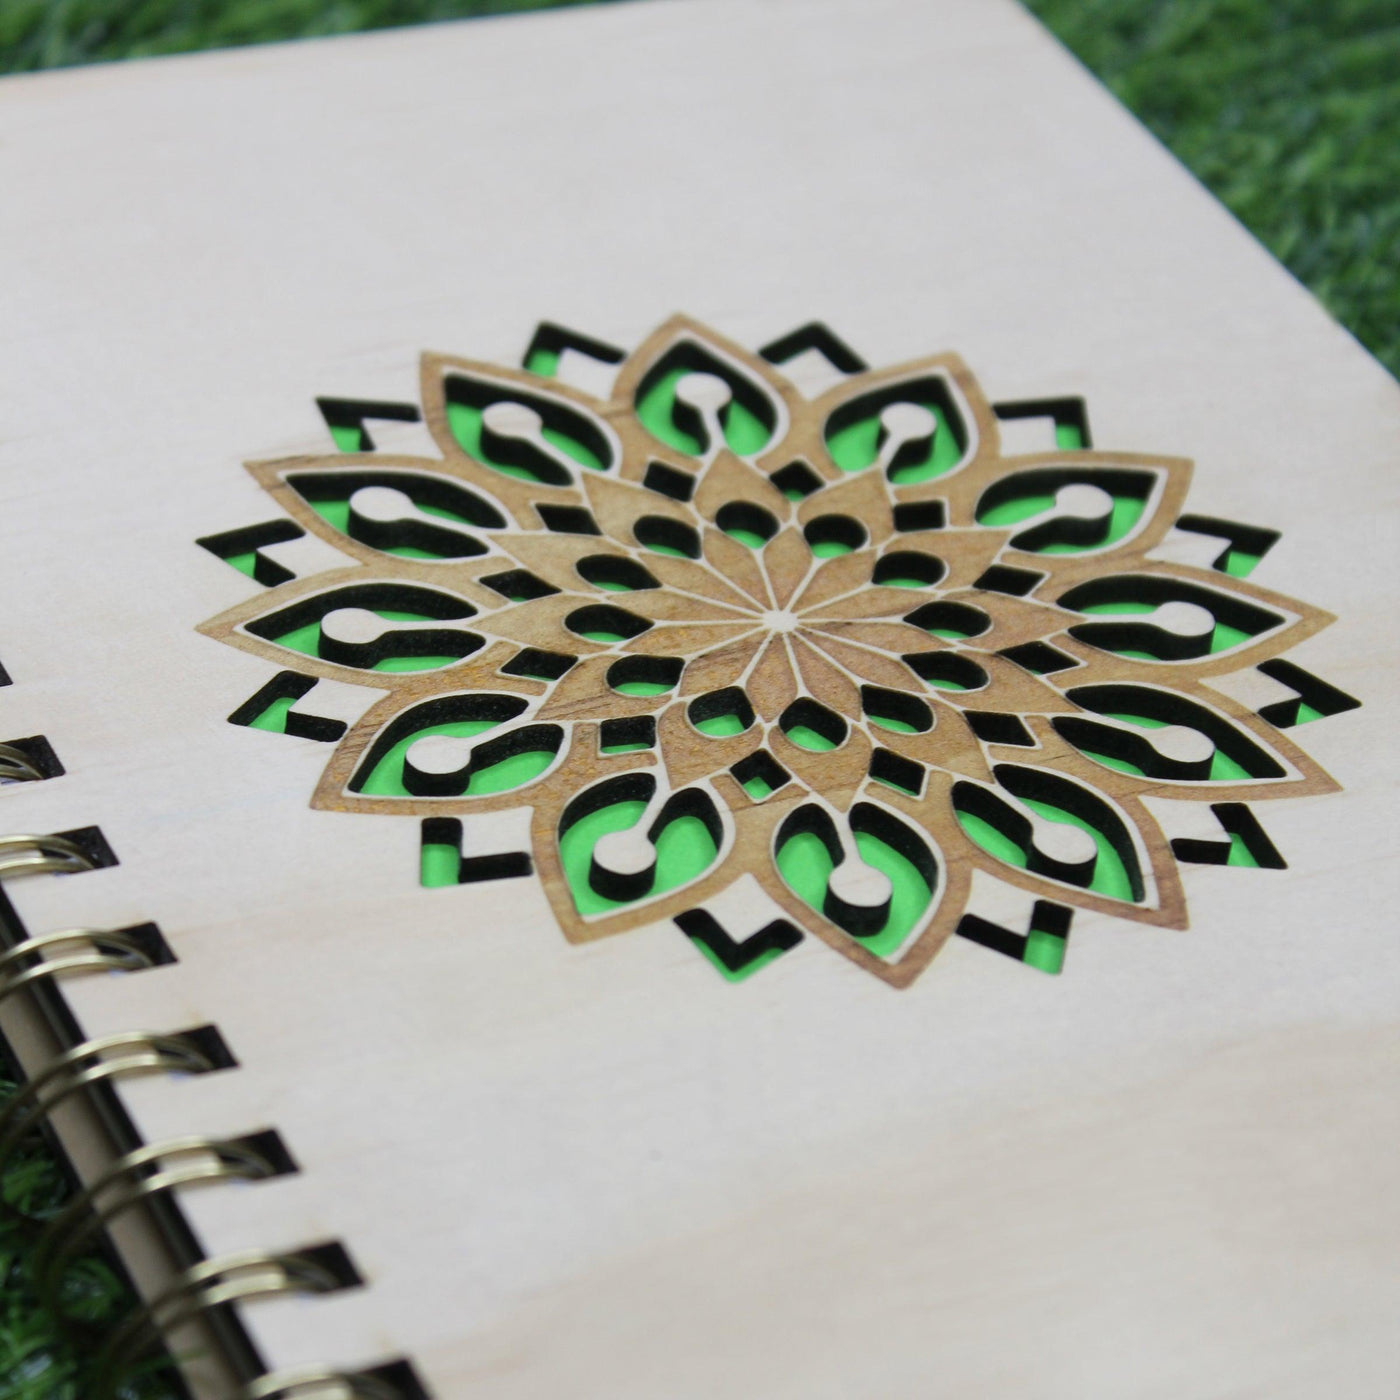 Personalised Wooden Notebook - Flower